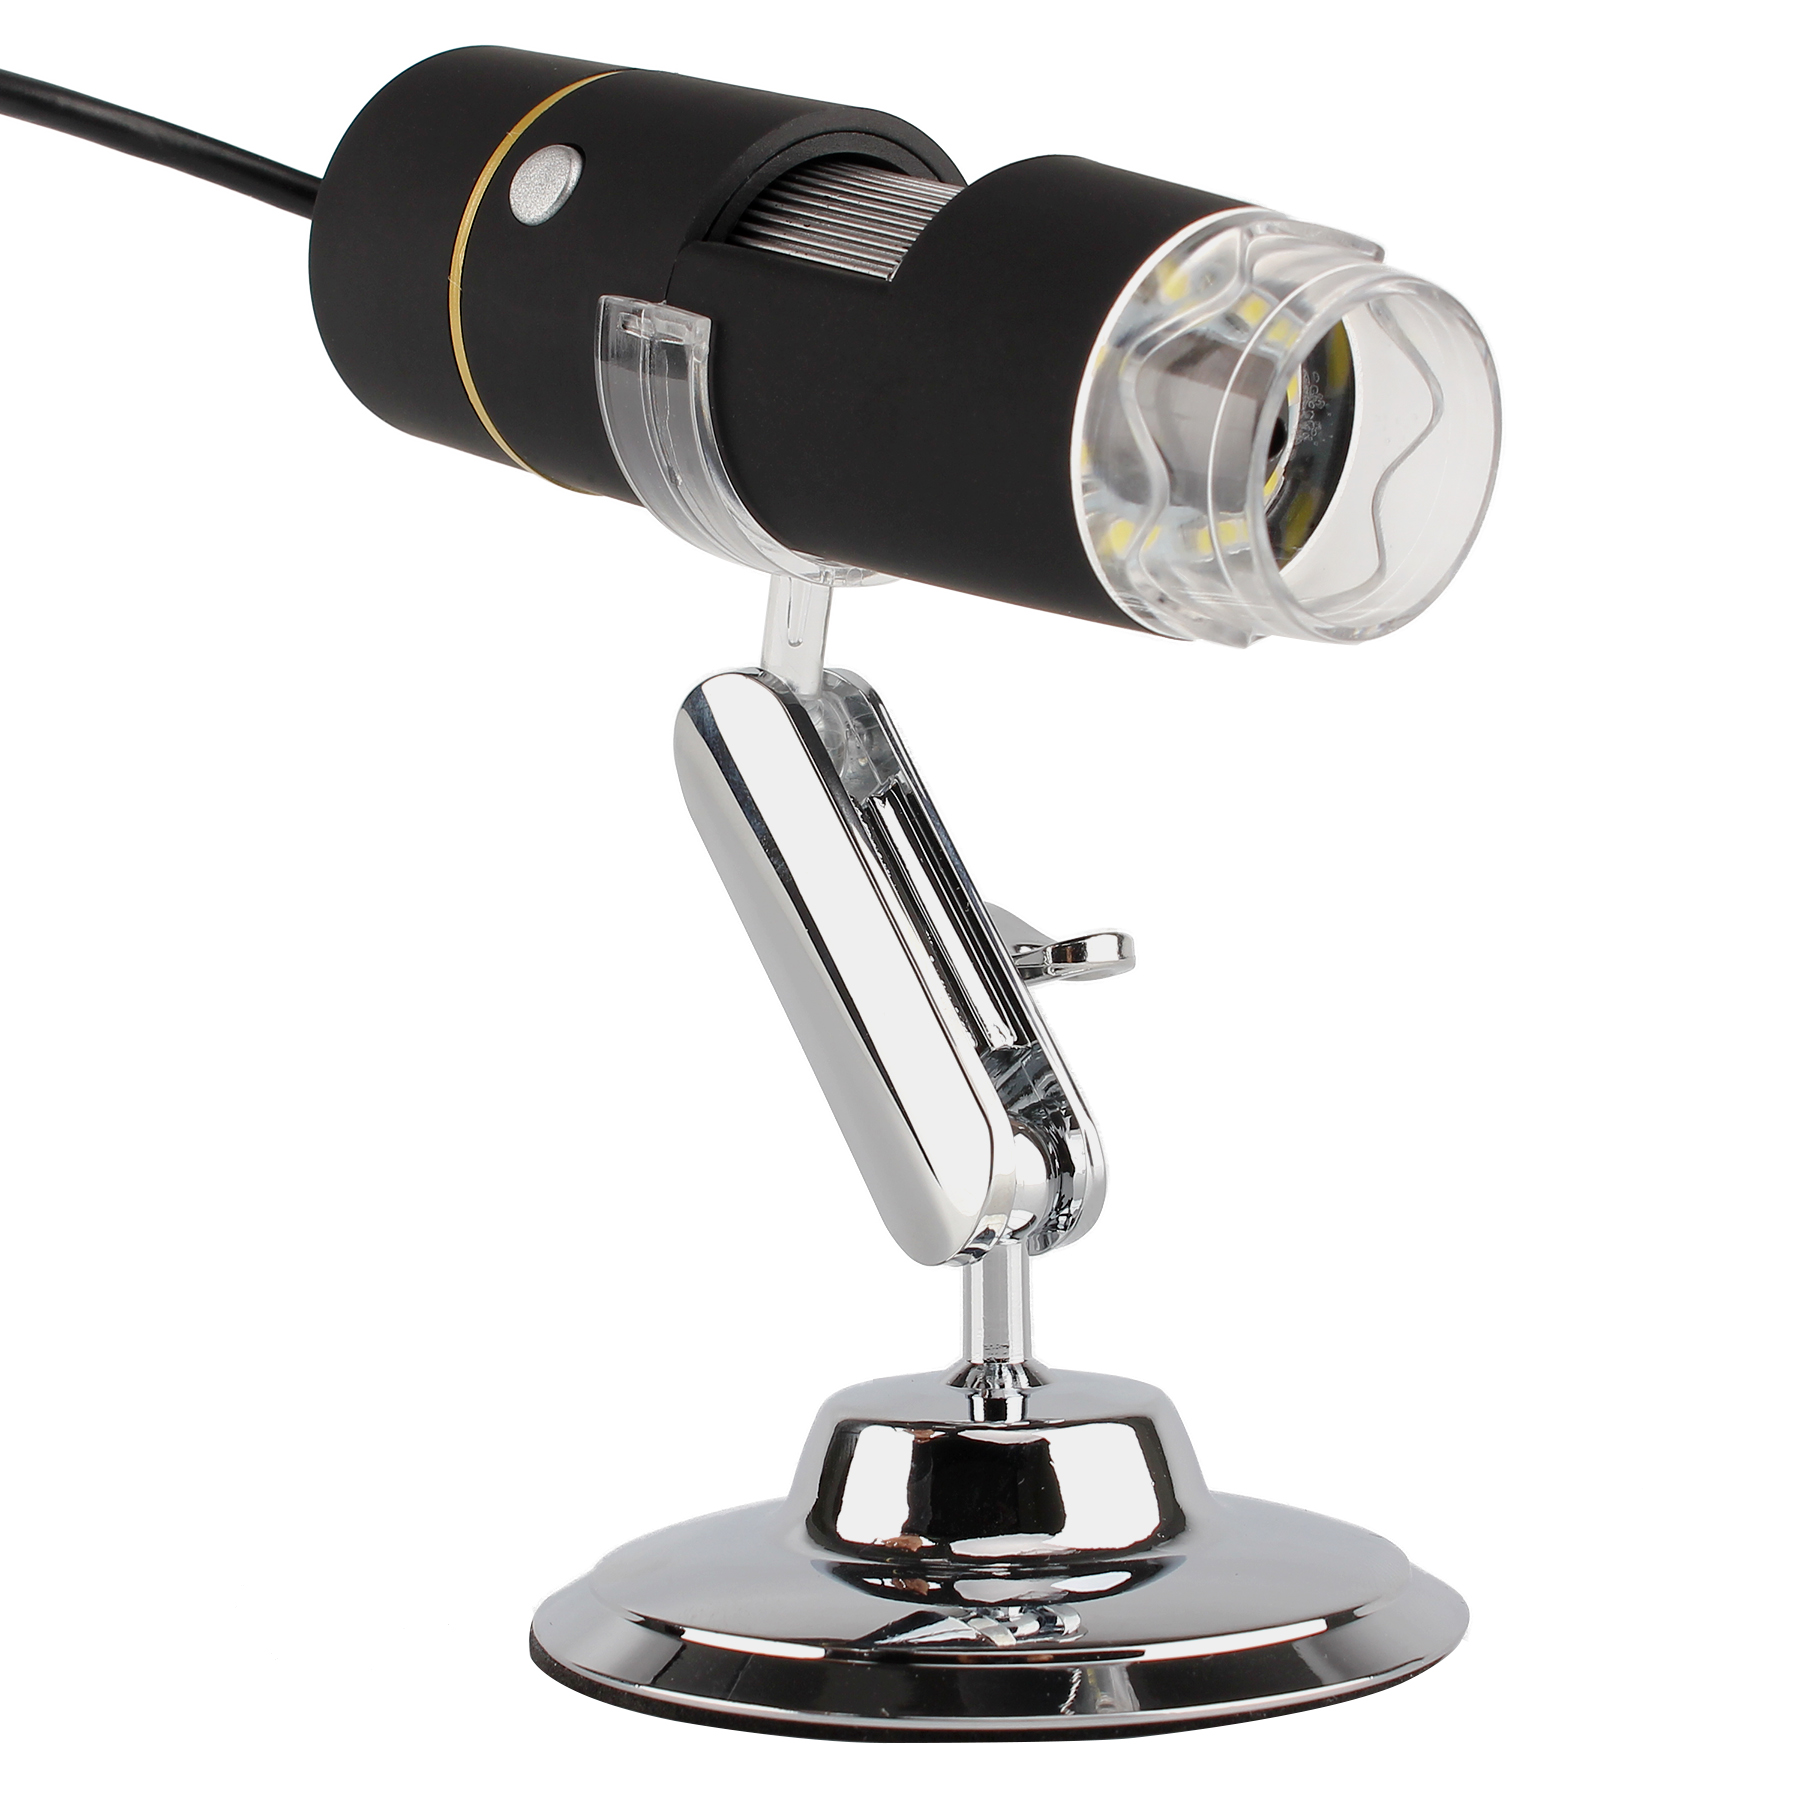 S2-USB-8-LED-1X-500X-Digital-Microscope-Endoscope-Magnifier-Video-Camera-Real-03MP13MP2MP-1043636-2